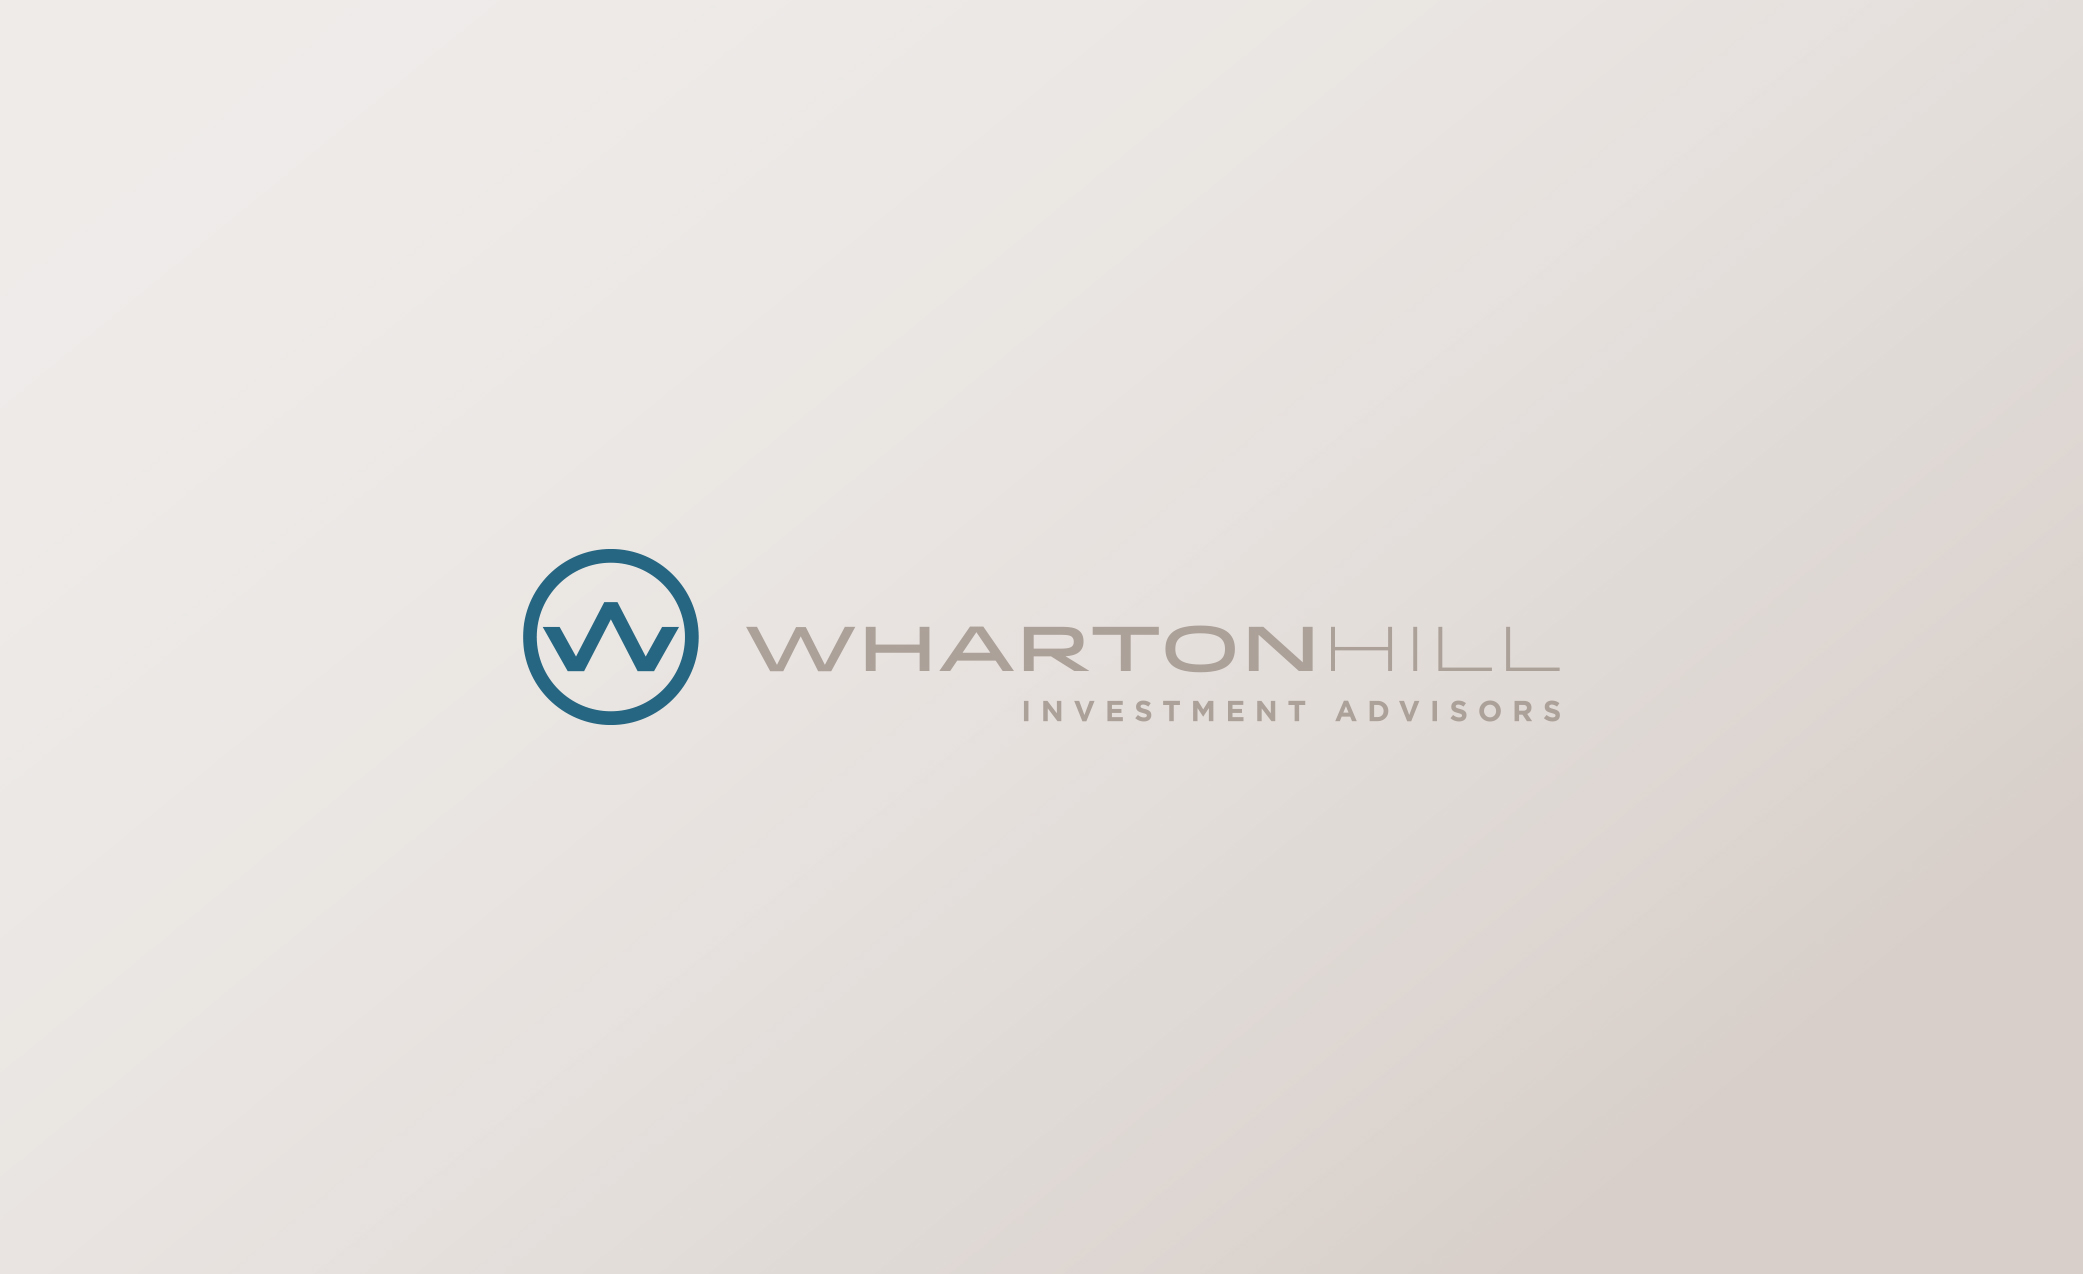 WhartonHill Investment Advisors brand development